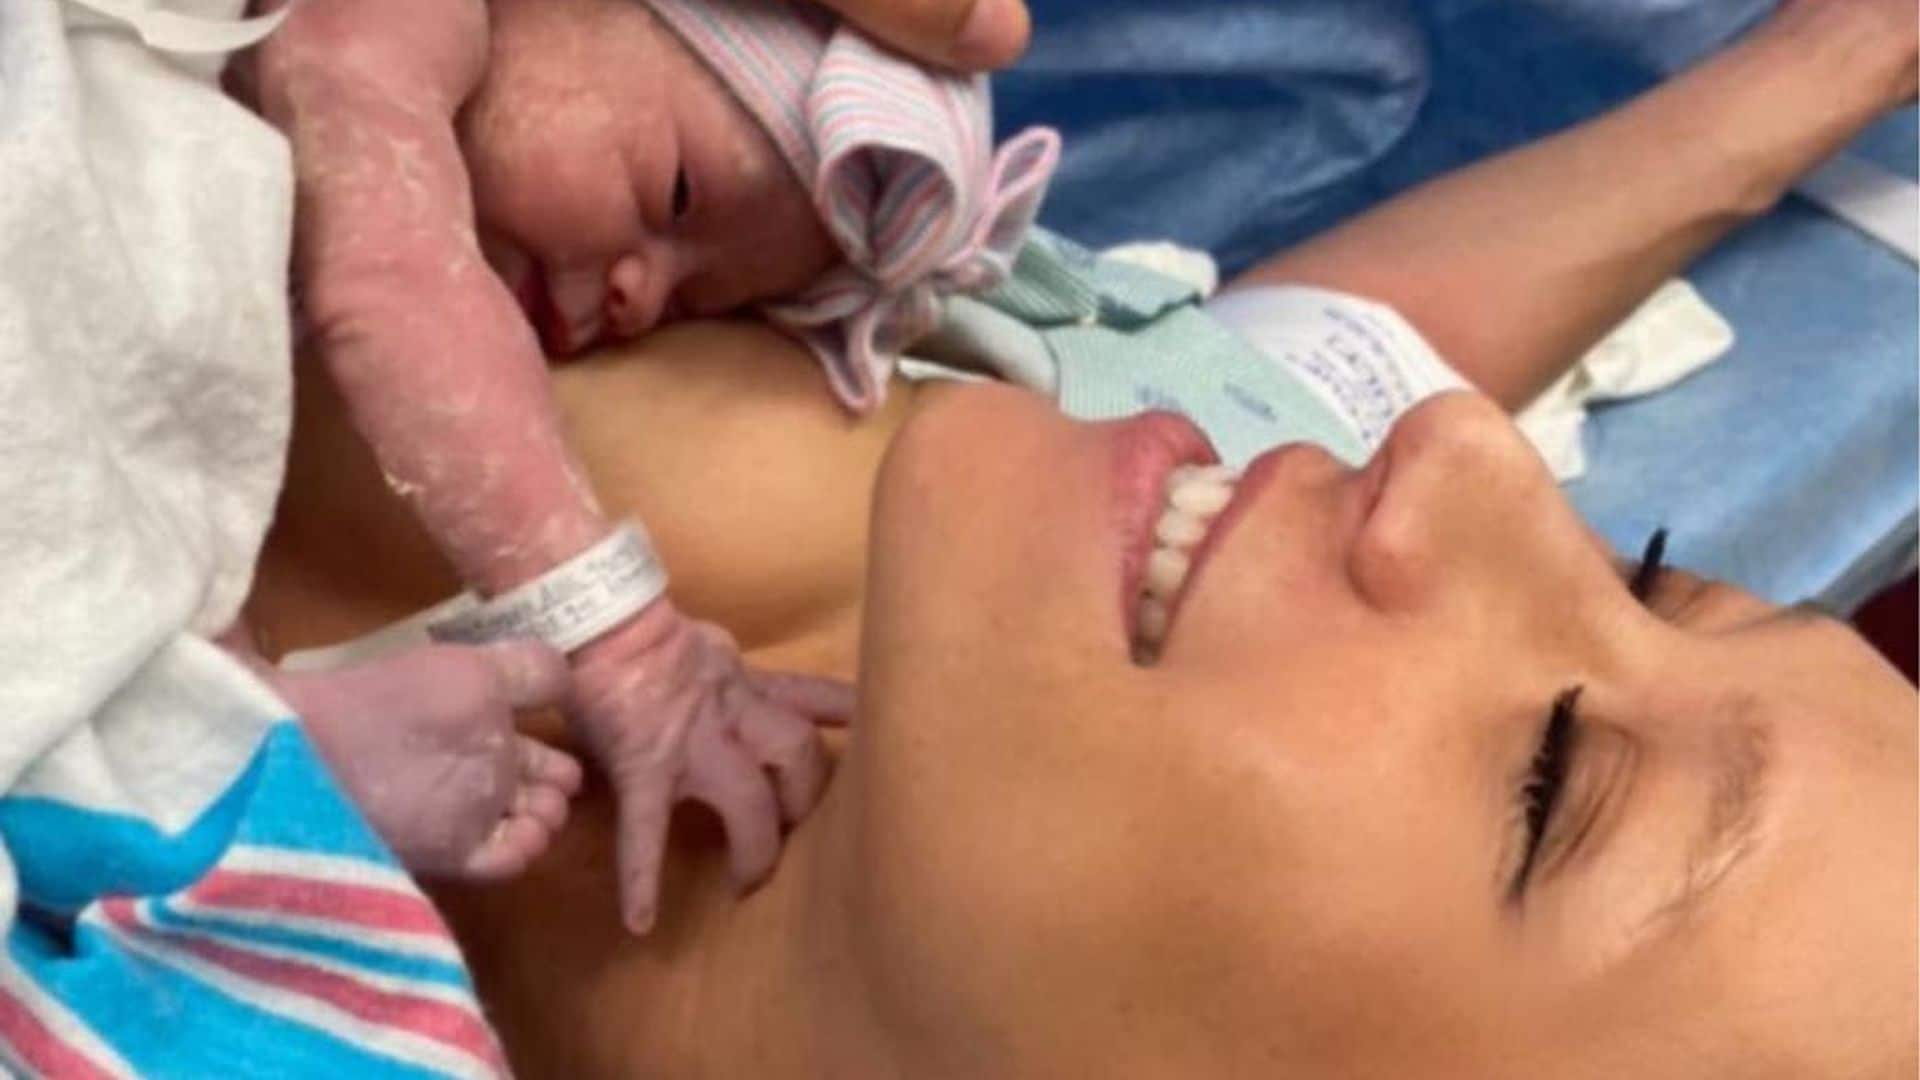 What have Enrique Iglesias and Anna Kournikova named their baby girl?